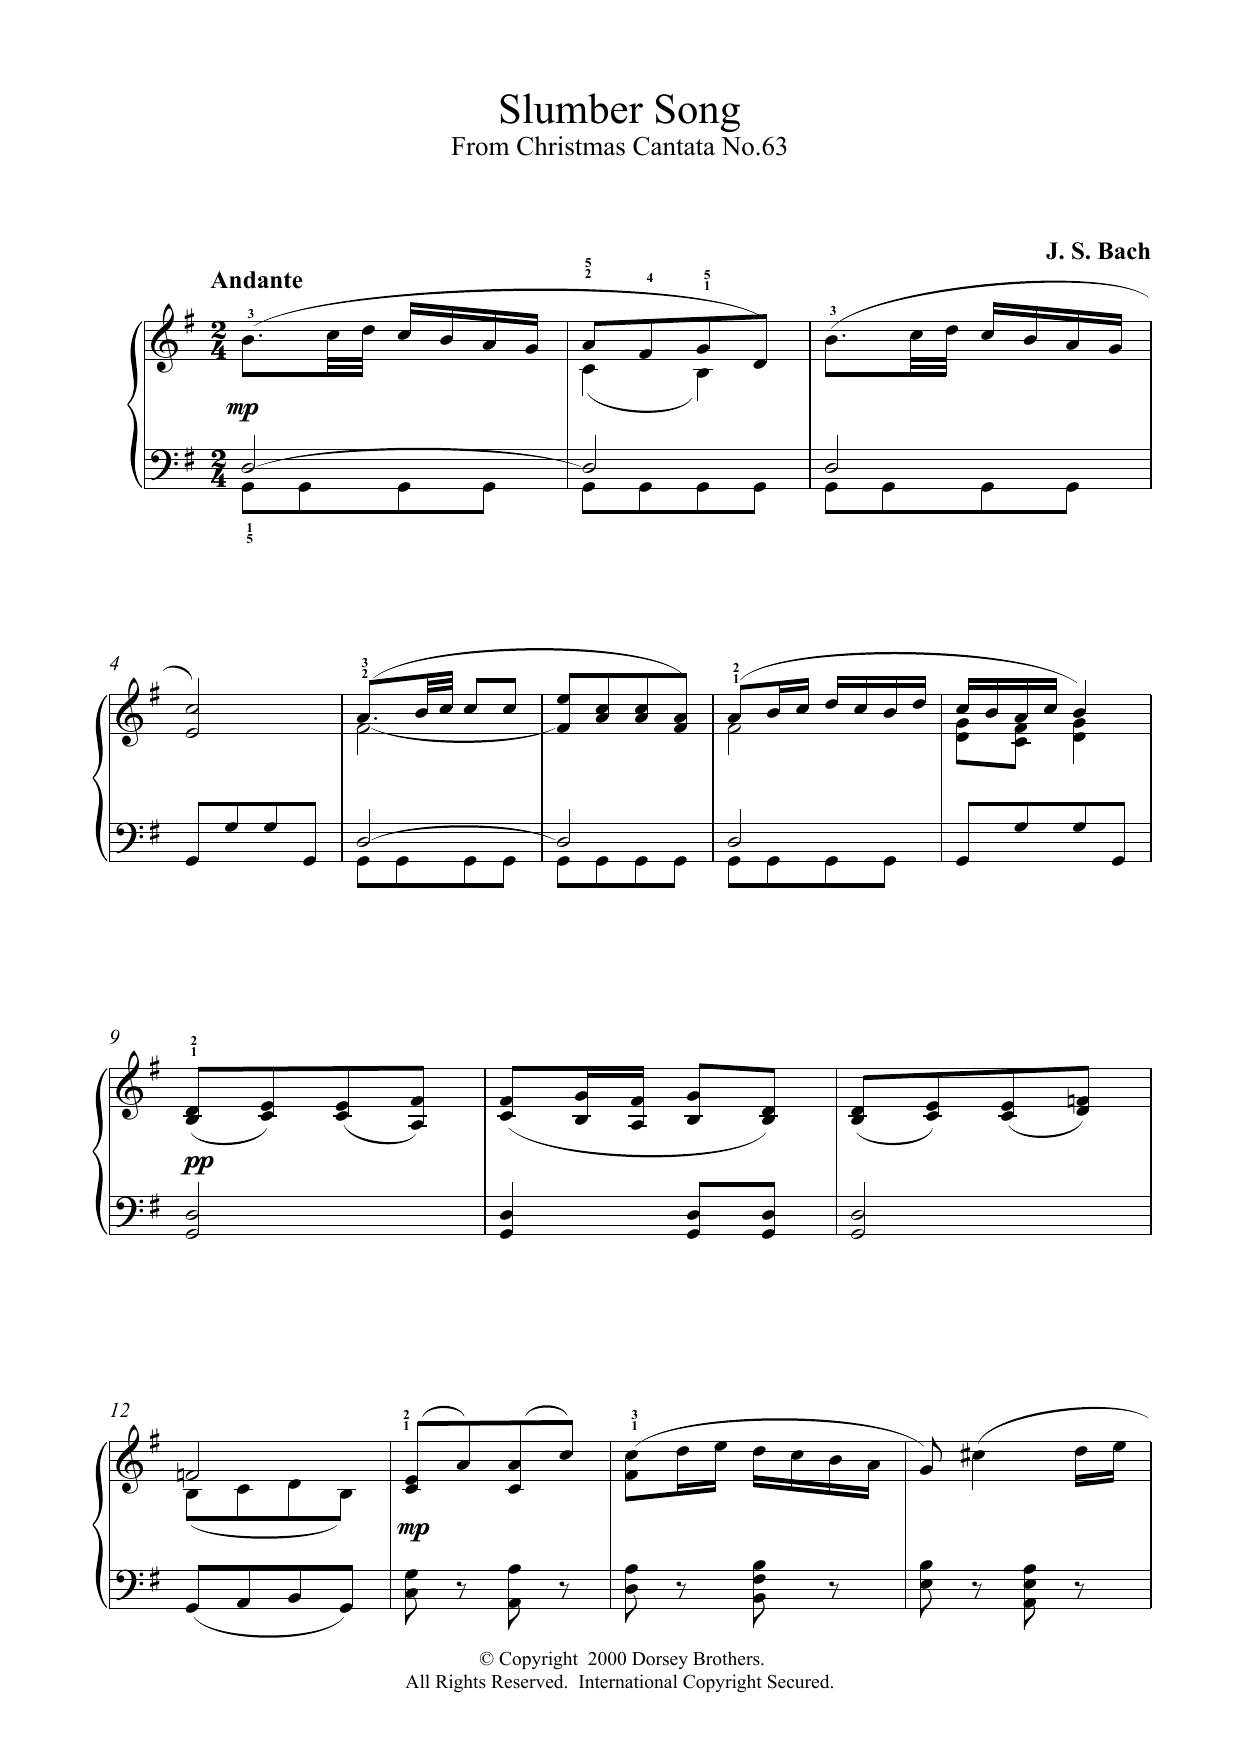 Johann Sebastian Bach Slumber Song Sheet Music Notes & Chords for Piano - Download or Print PDF